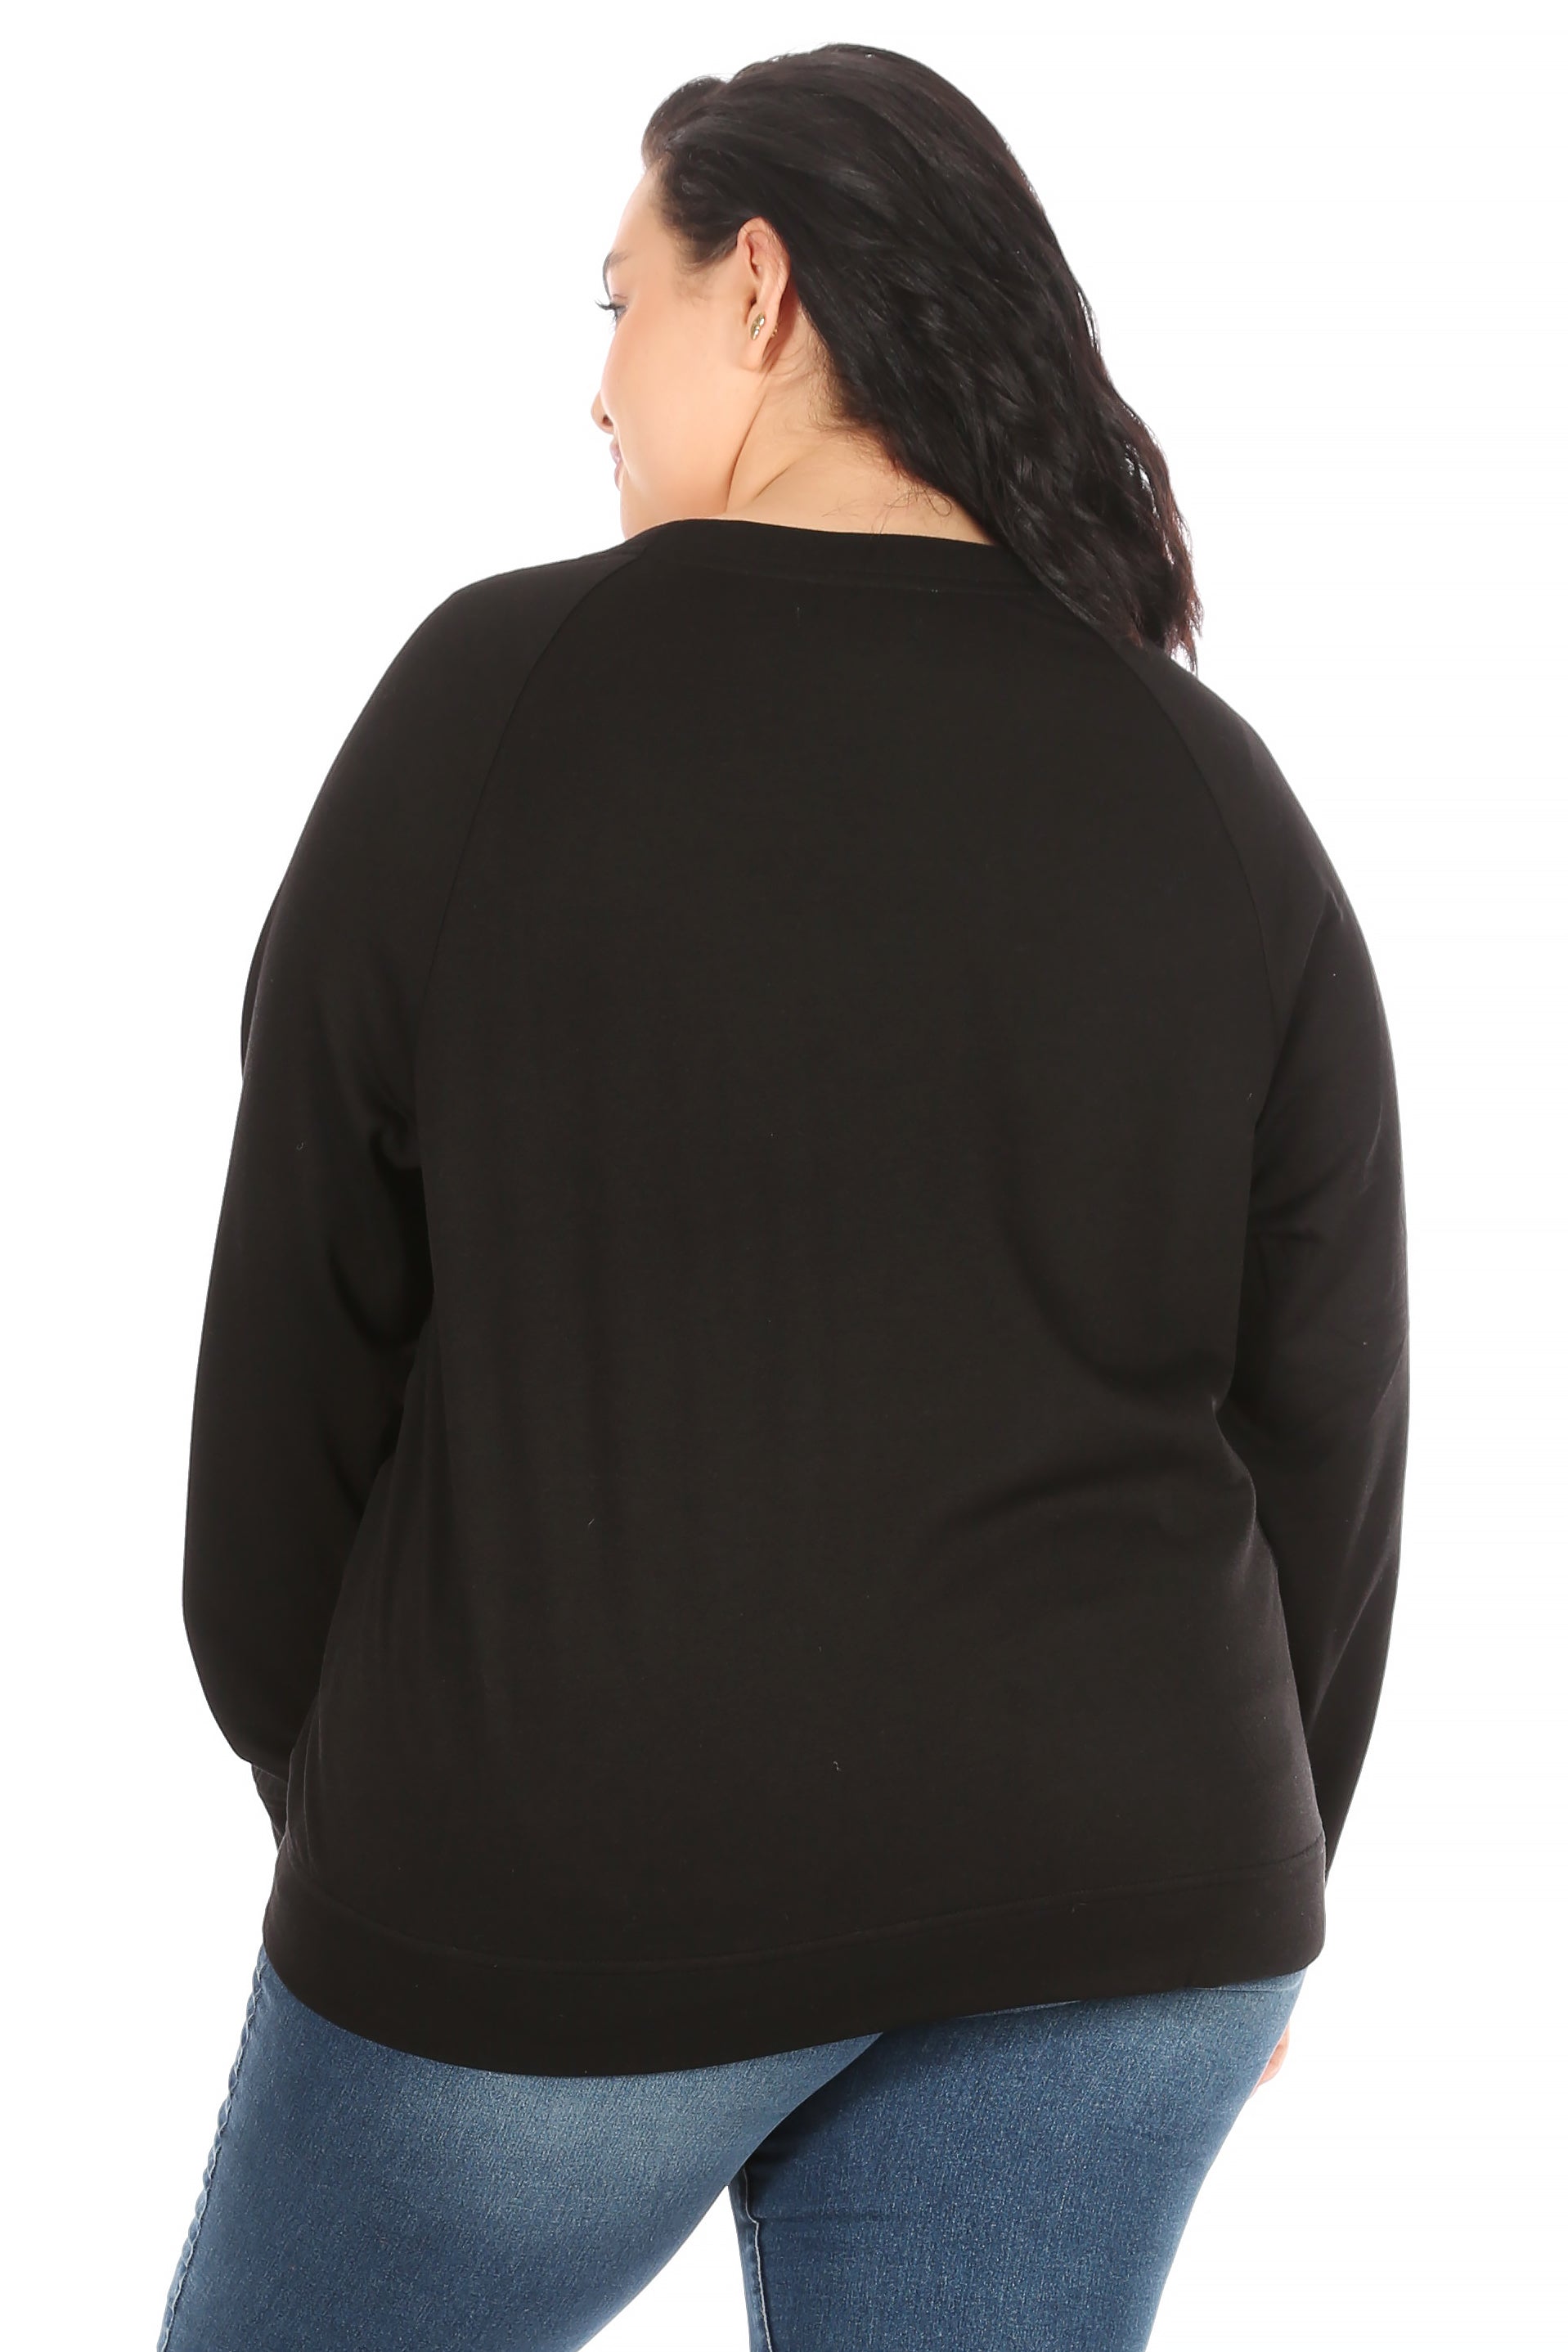 Women's "TE AMO" Plus Size Studio Raglan Pullover Sweatshirt - Rae Dunn Wear